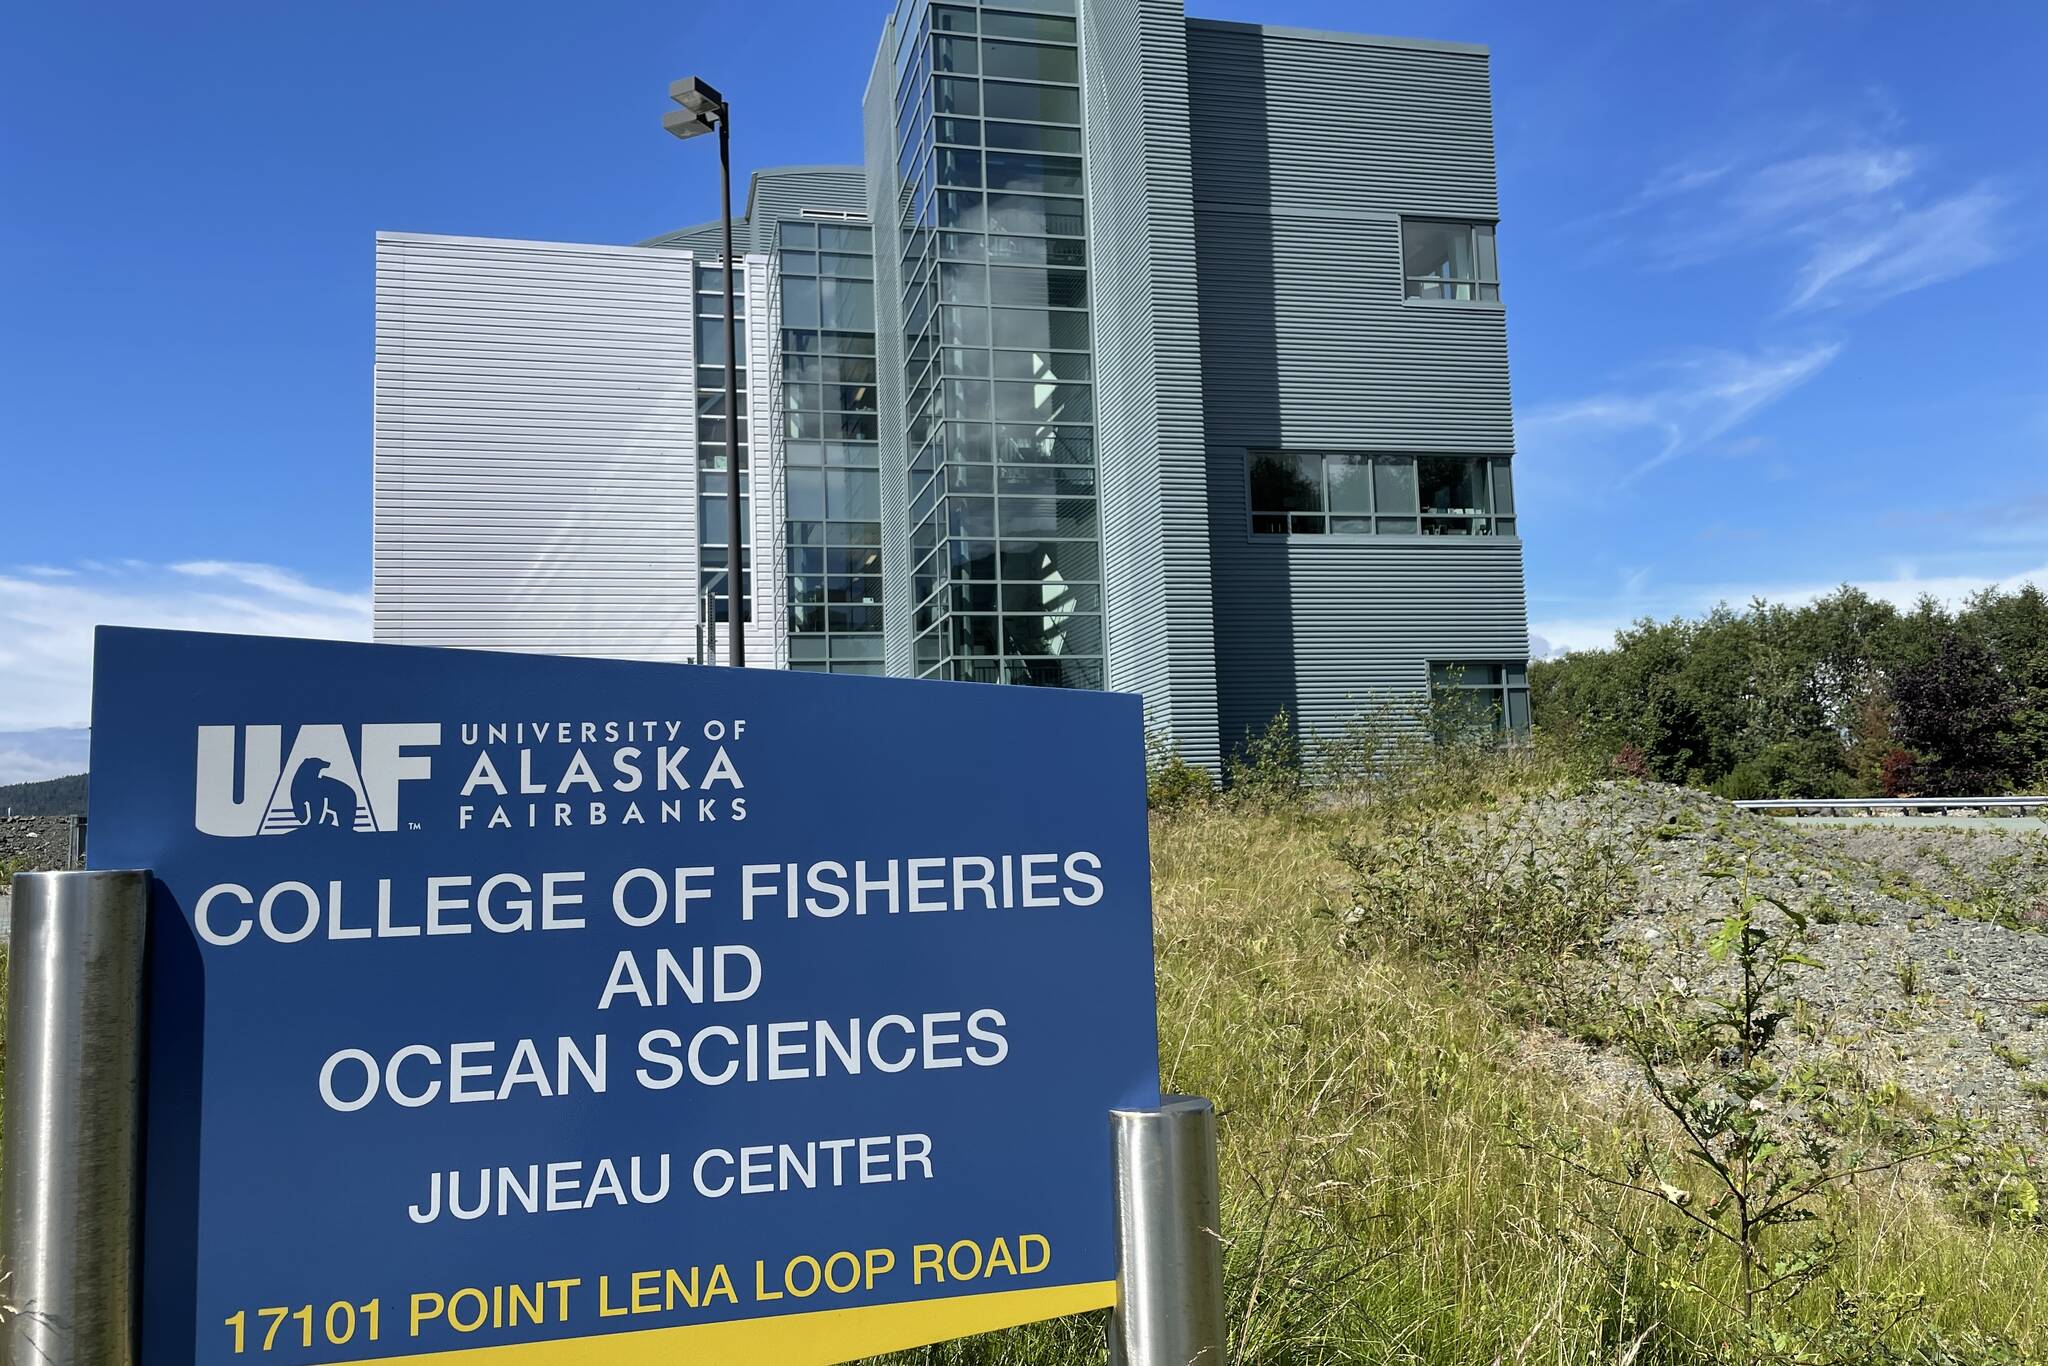 University of Alaska Fairbanks is now offering a masters of marine policy program in partnership with University of Alaska Southeast. (Michael S. Lockett / Juneau Empire)